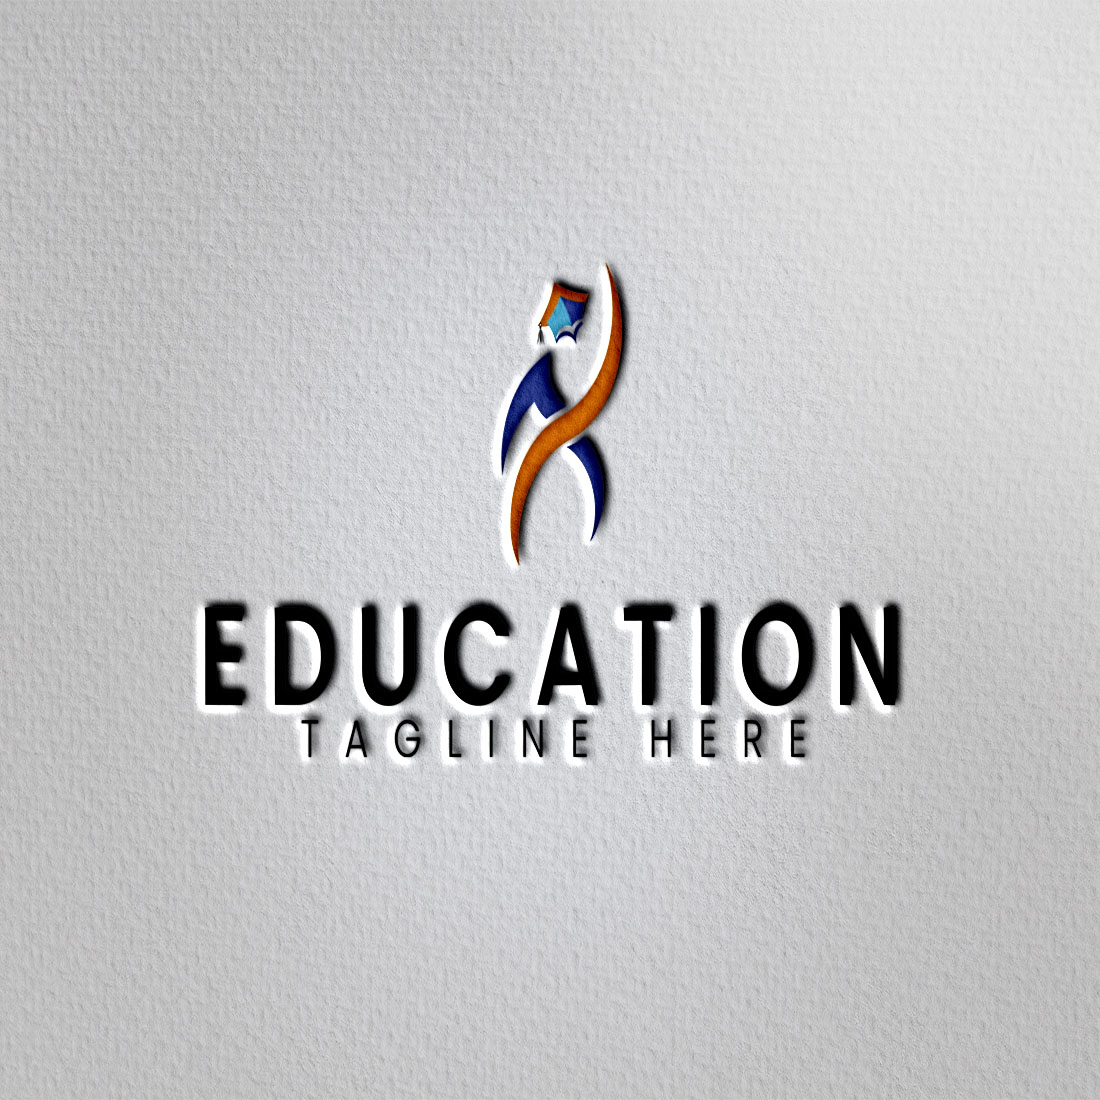 Educational logo cover image.